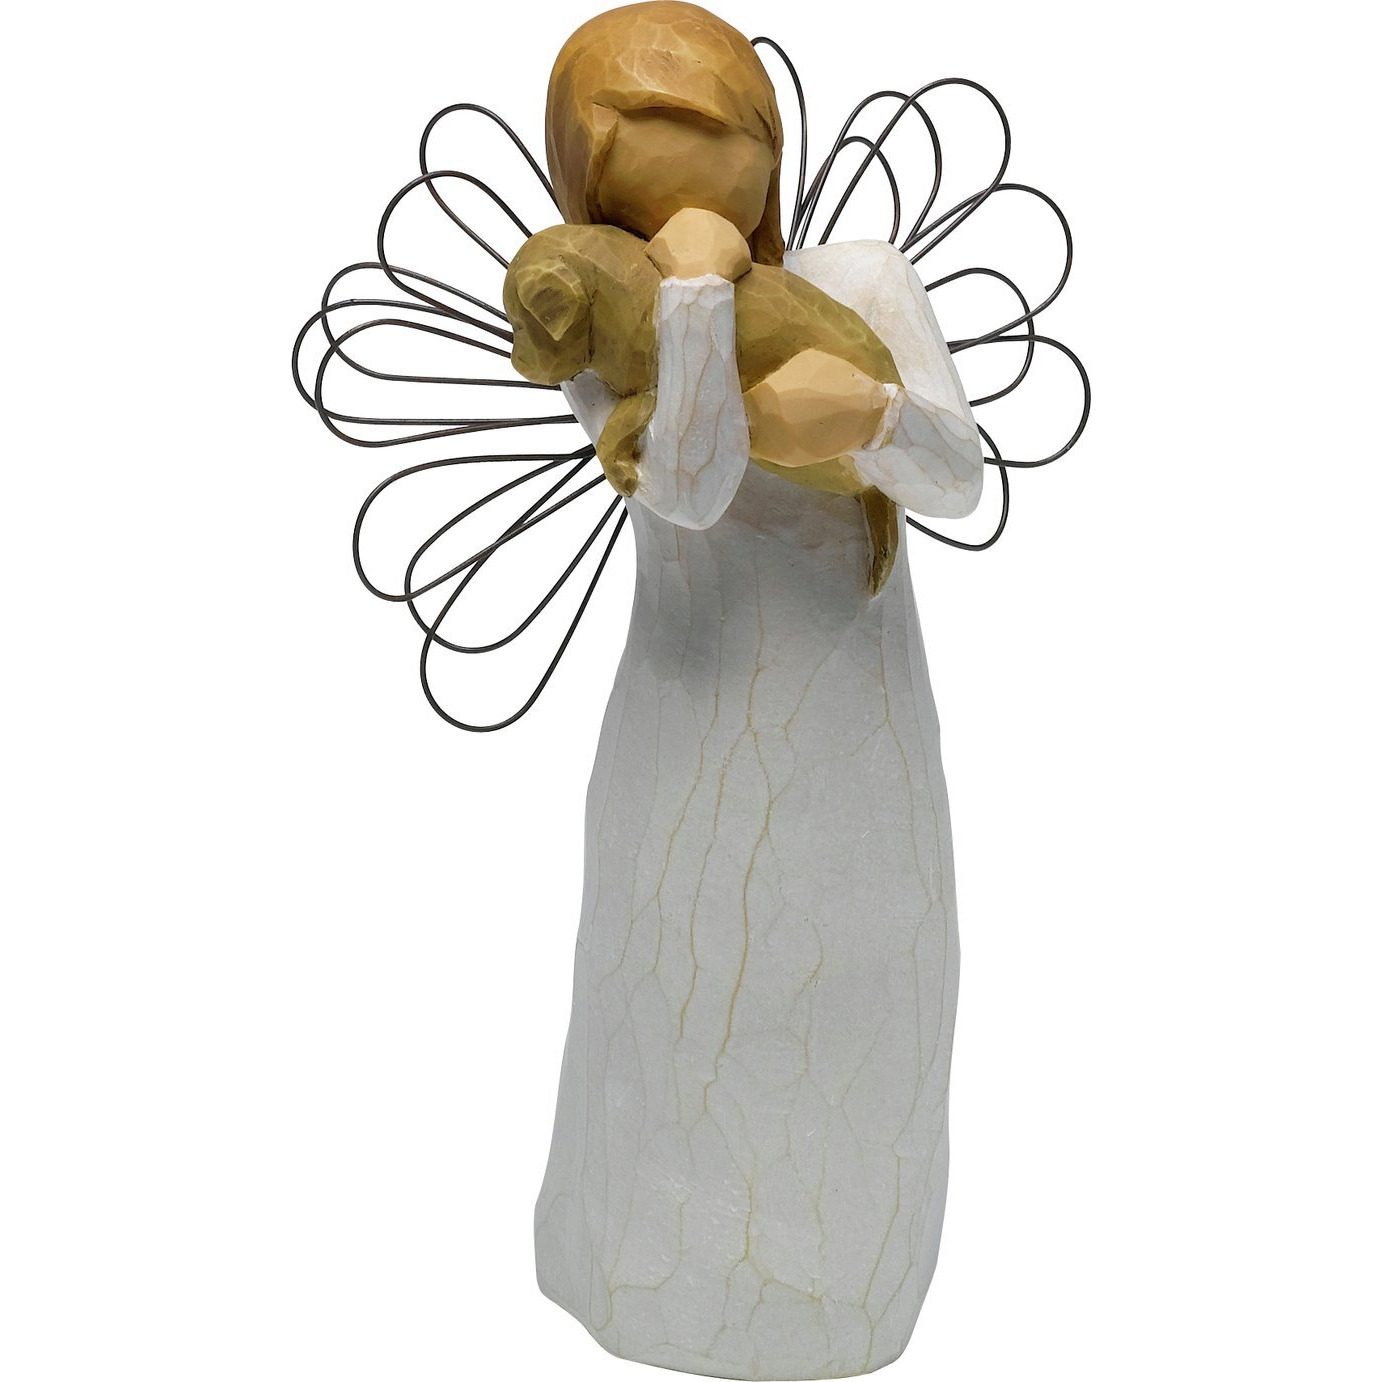 Willow Tree Angel of Friendship Figurine - image 1